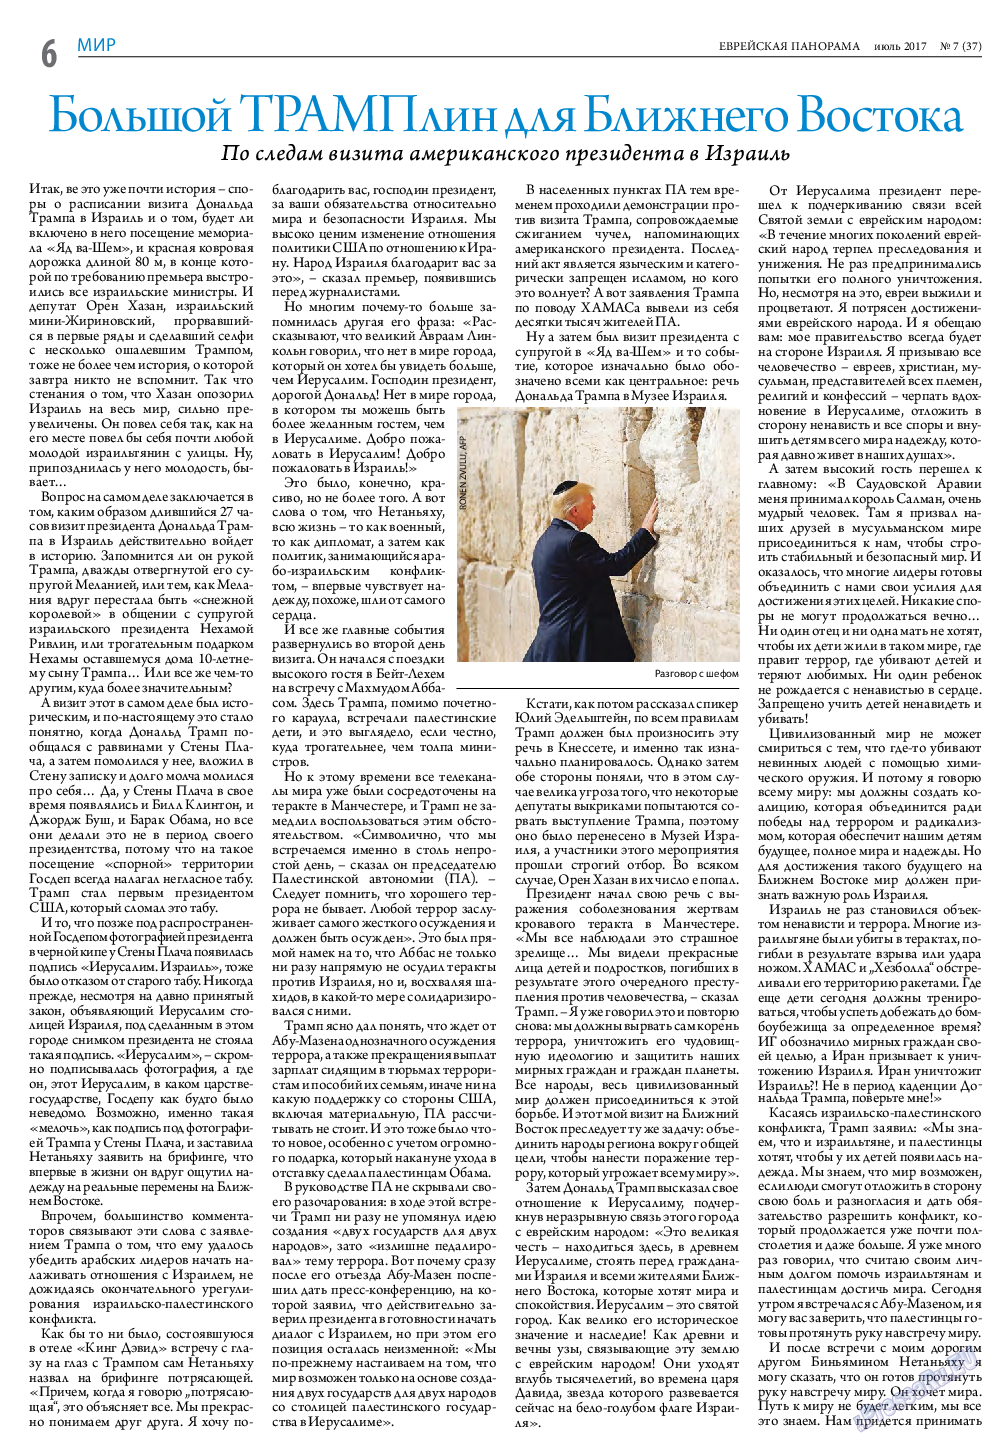 Еврейская панорама, газета. 2017 №7 стр.6